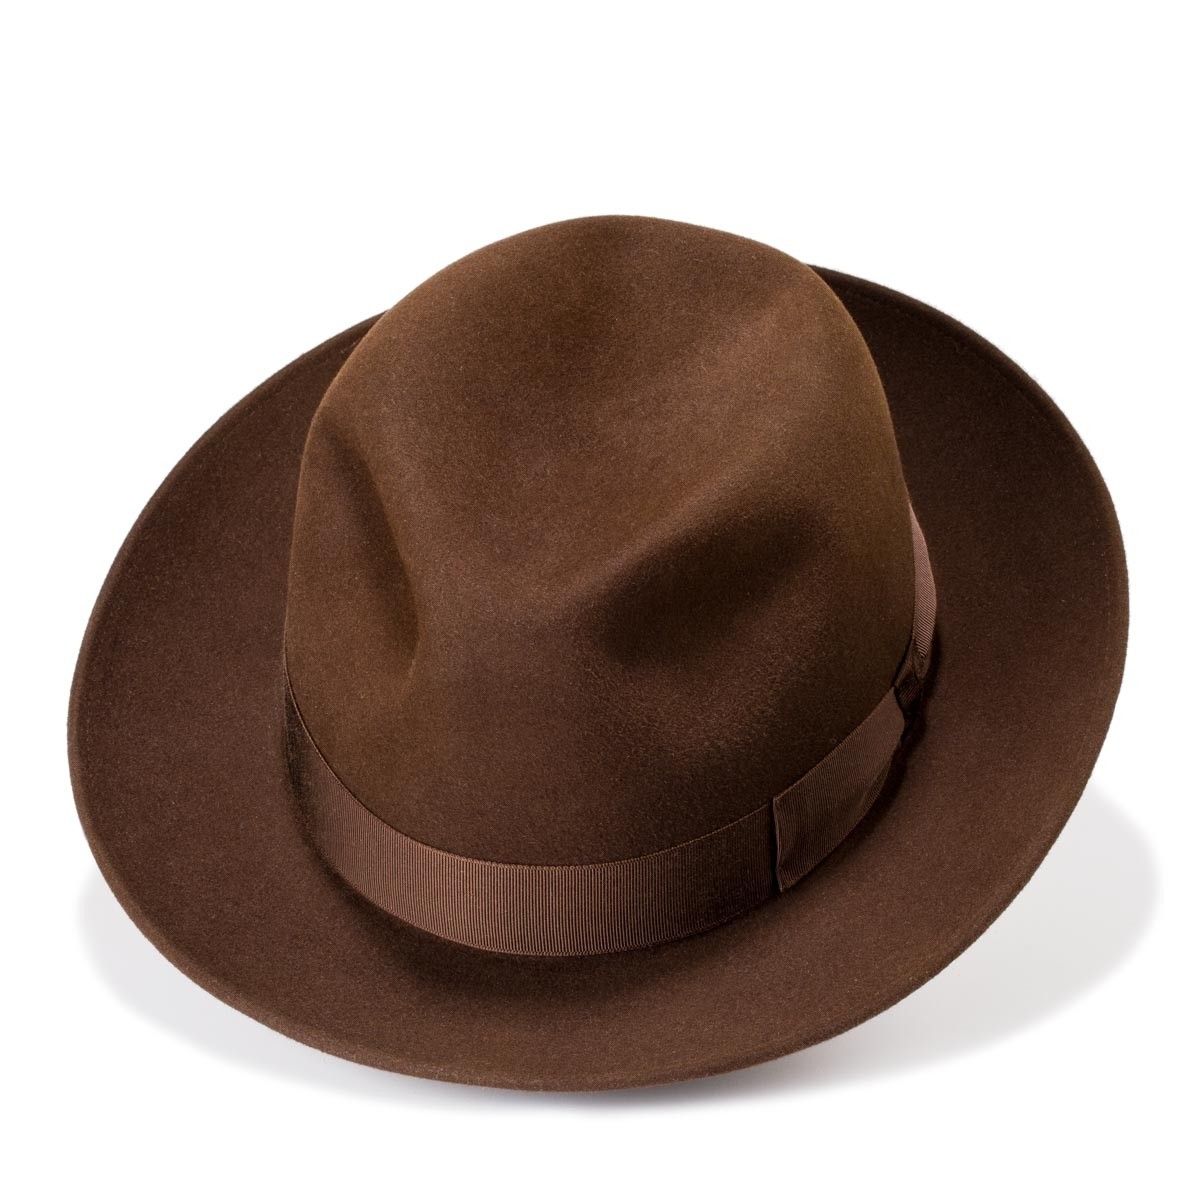 Nic brown felt fedora style hat. Handmande in Spain. Fernandez y Roche